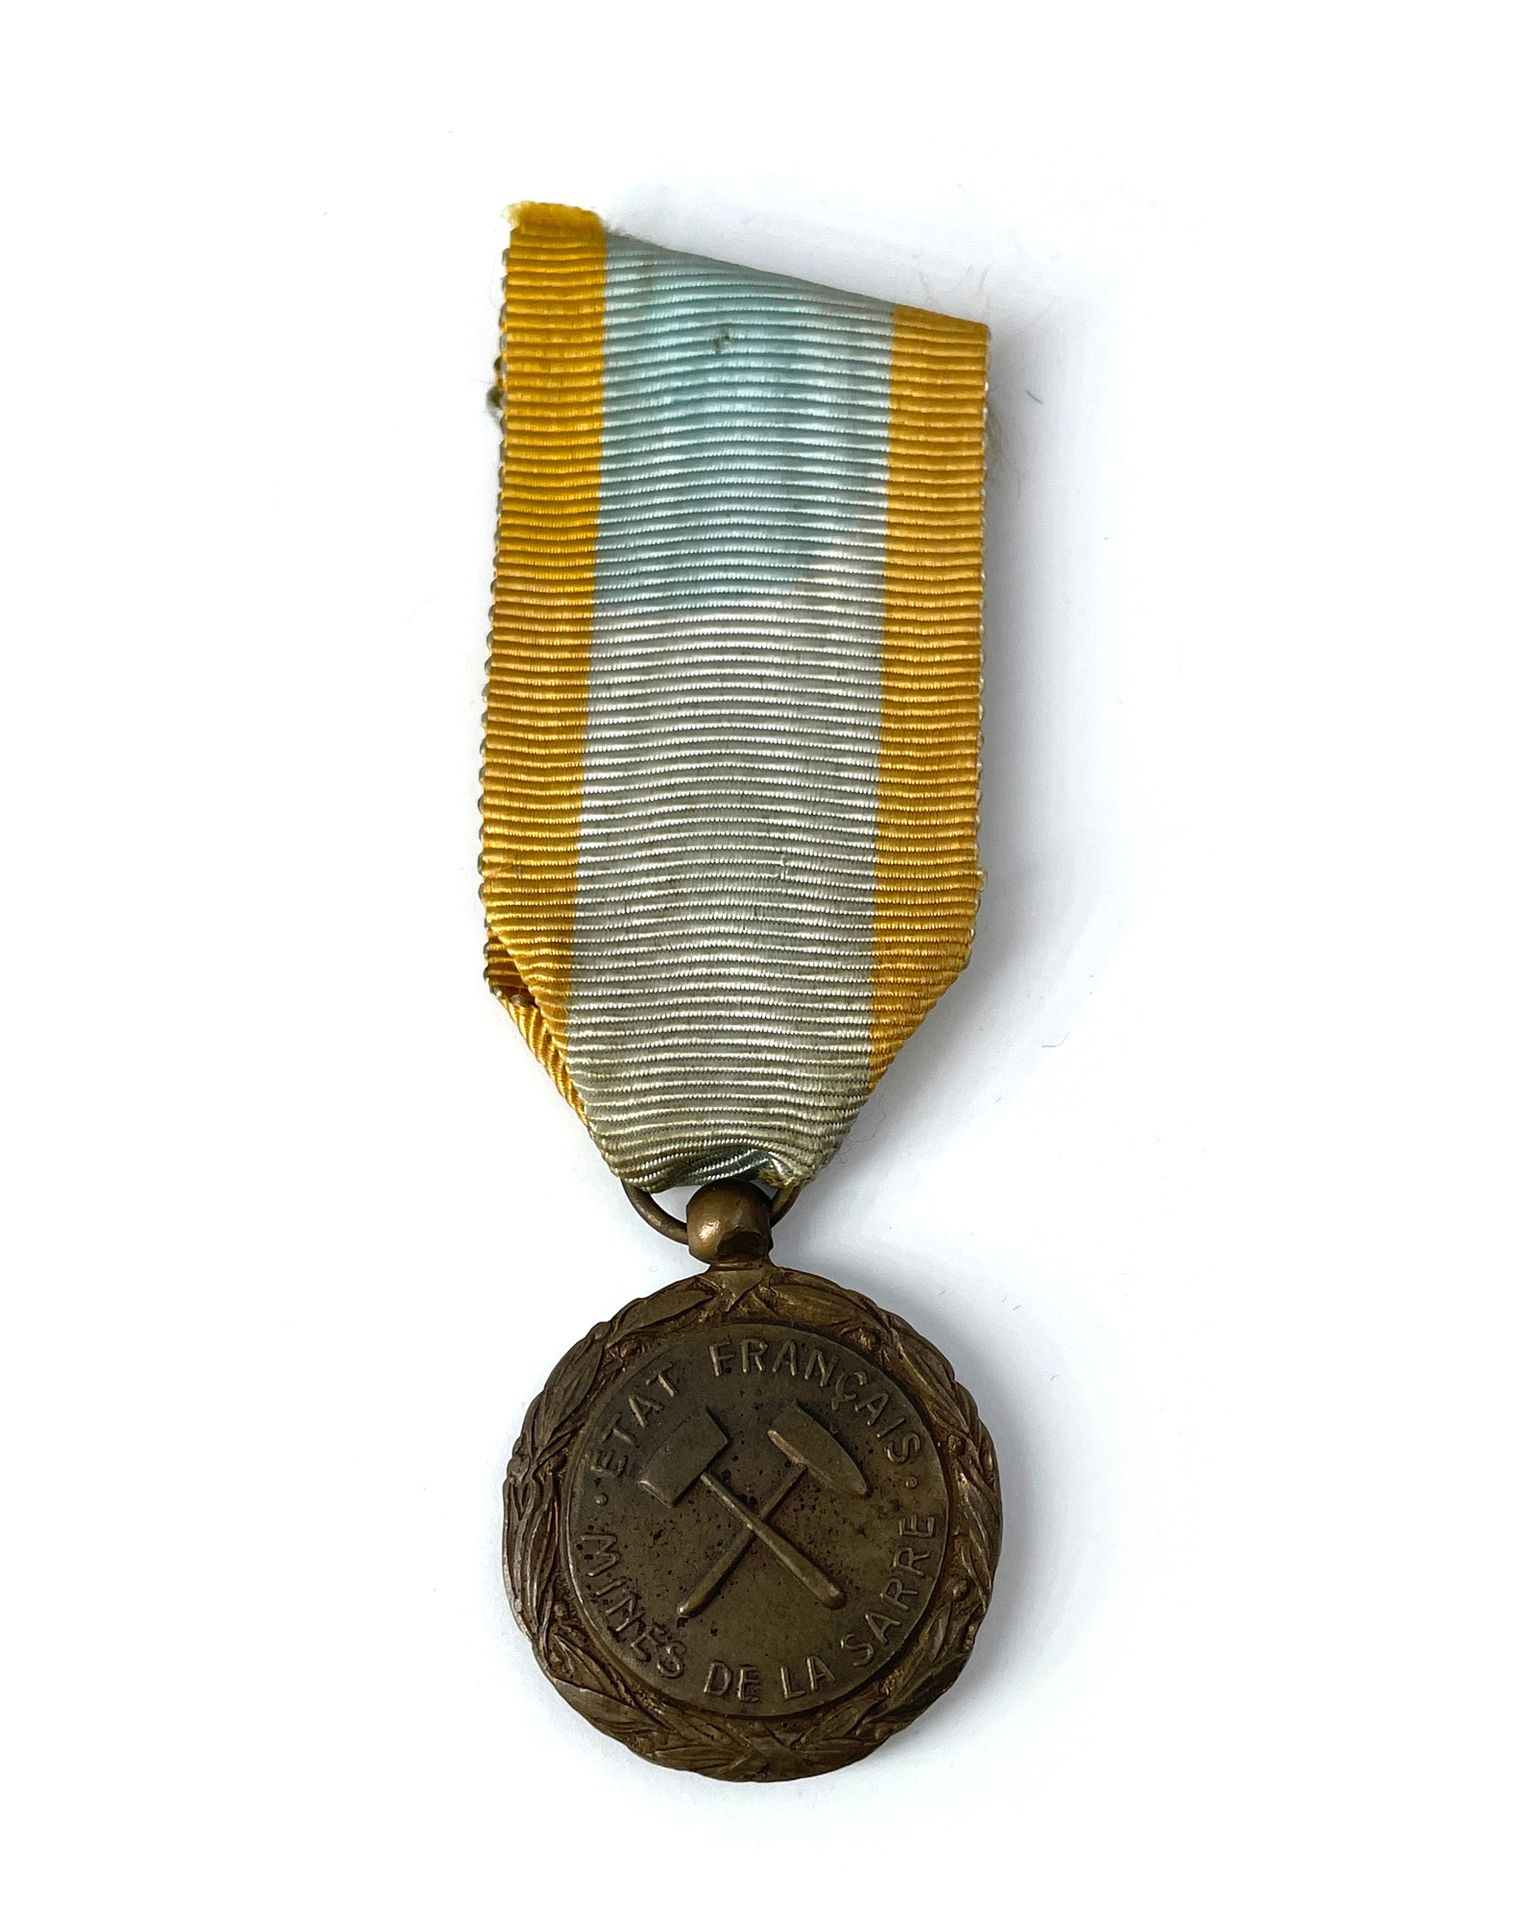 Null FRANCIA Medaglia mineraria del Saarland.
In bronzo. Nastro.
30 mm.